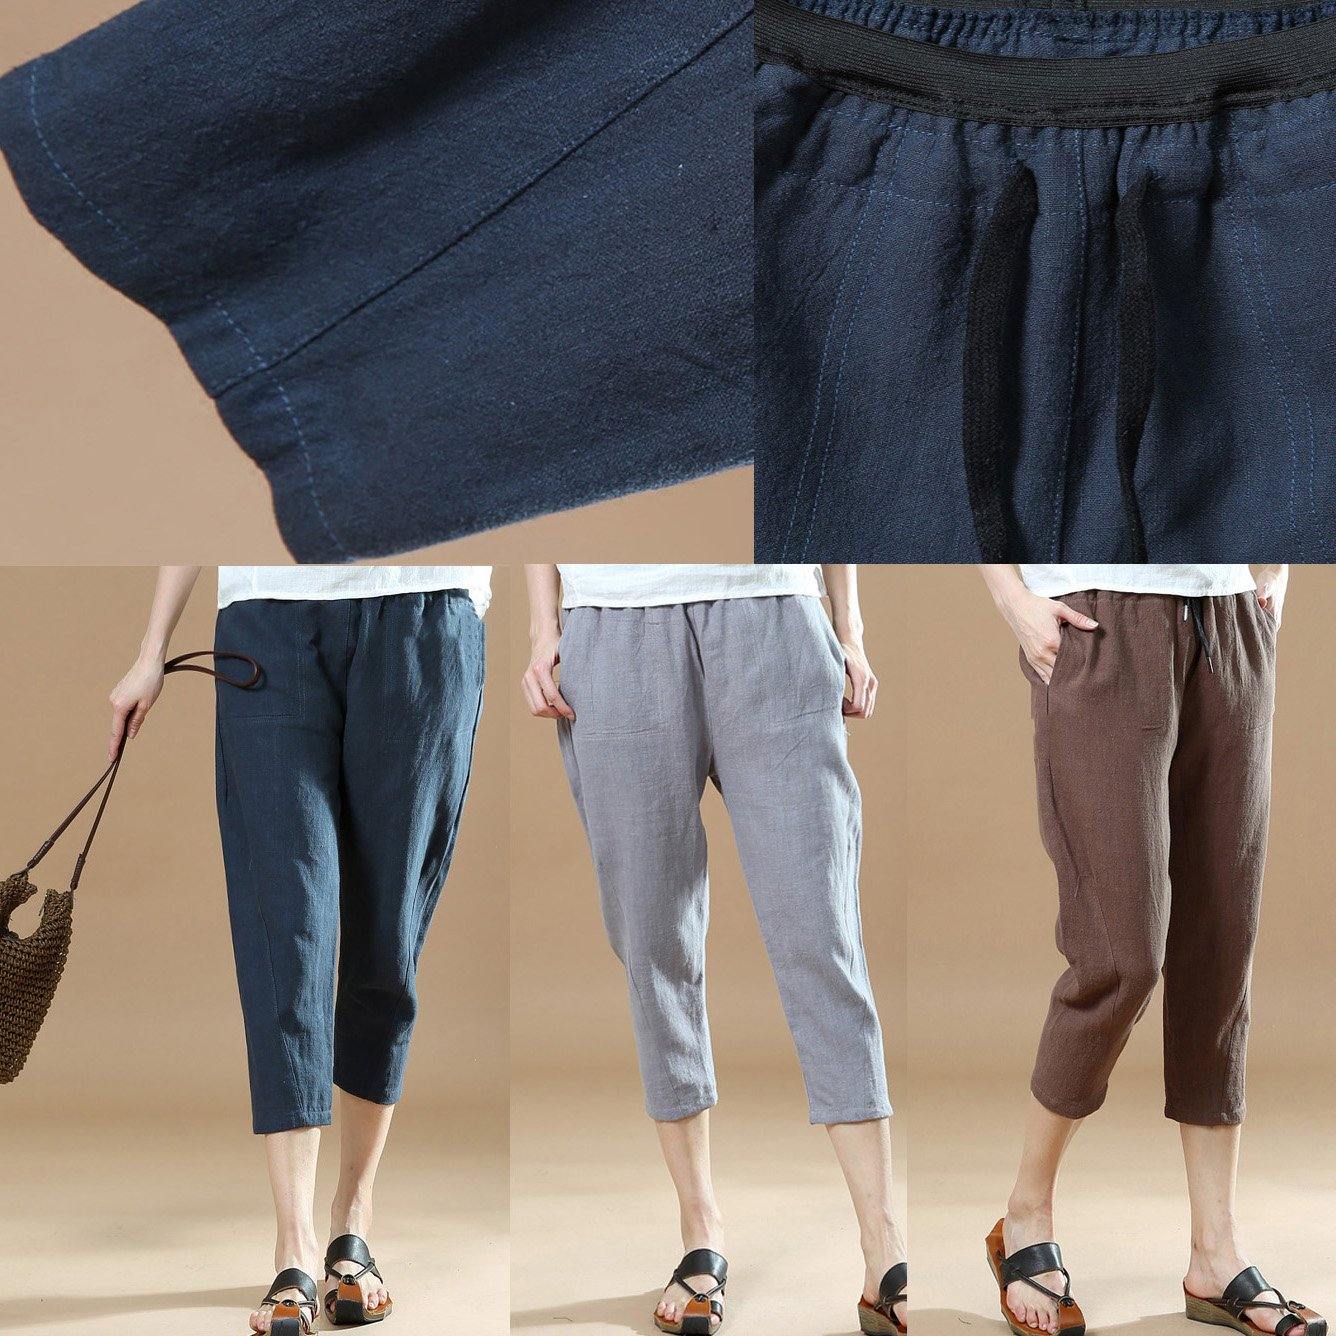 new gray brief linen pants loose elastic waist crop pants - Omychic